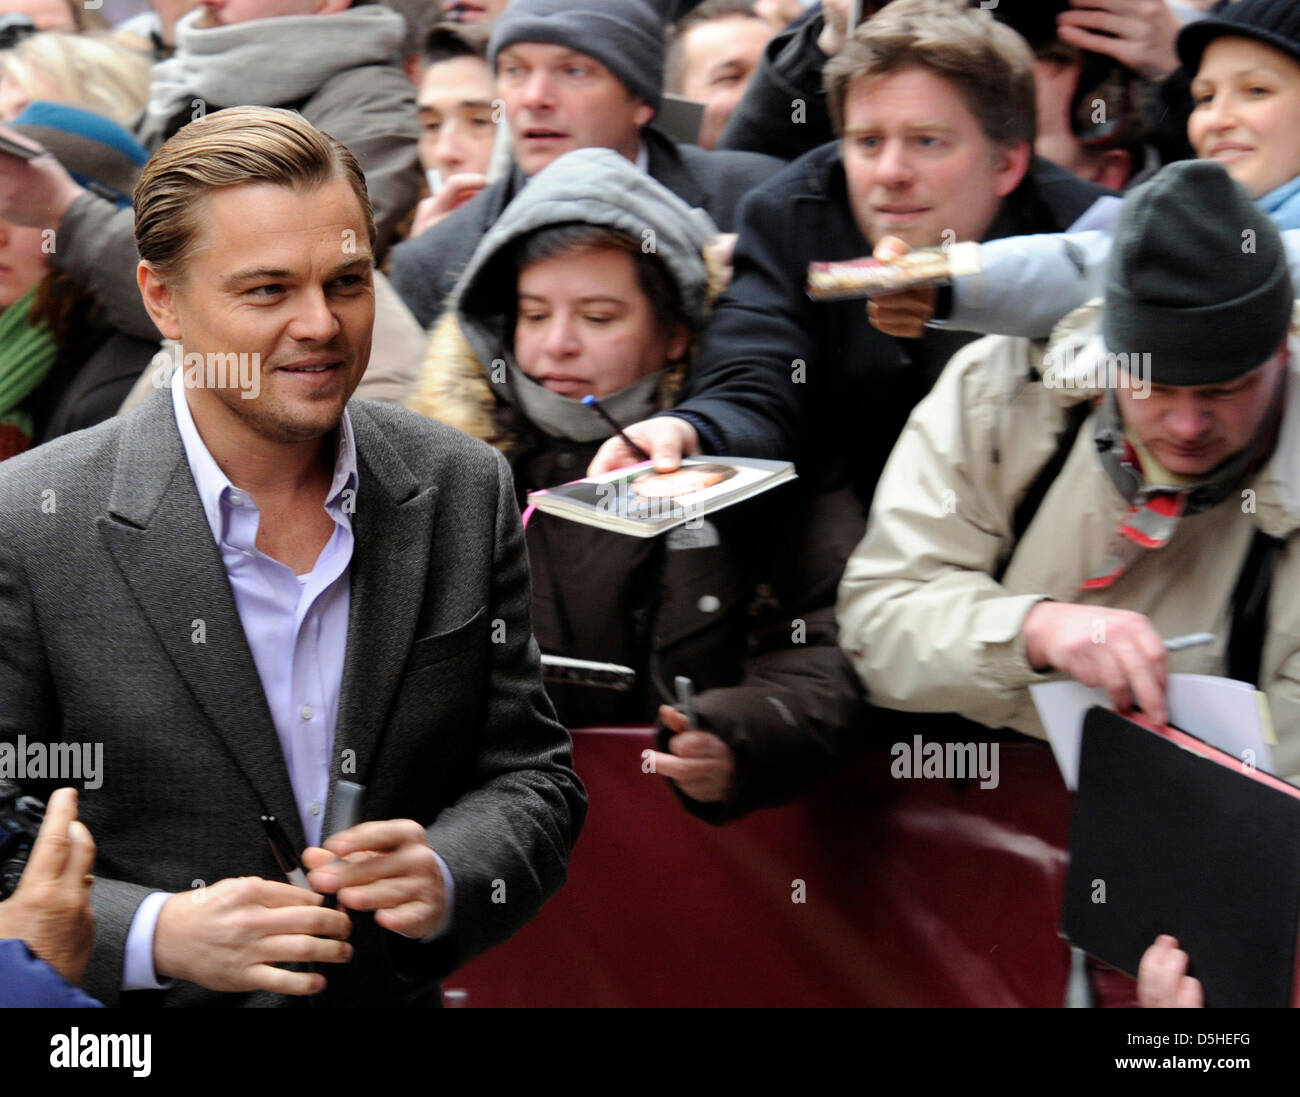 US actor Leonardo DiCaprio arrives at the 60th Berlinale International Film Festival in Berlin, Germany, Saturday, 13 Febuary 2010. His film 'Shutter Island' runs in competition. Foto: Arno Burgi dpa/lbn Stock Photo